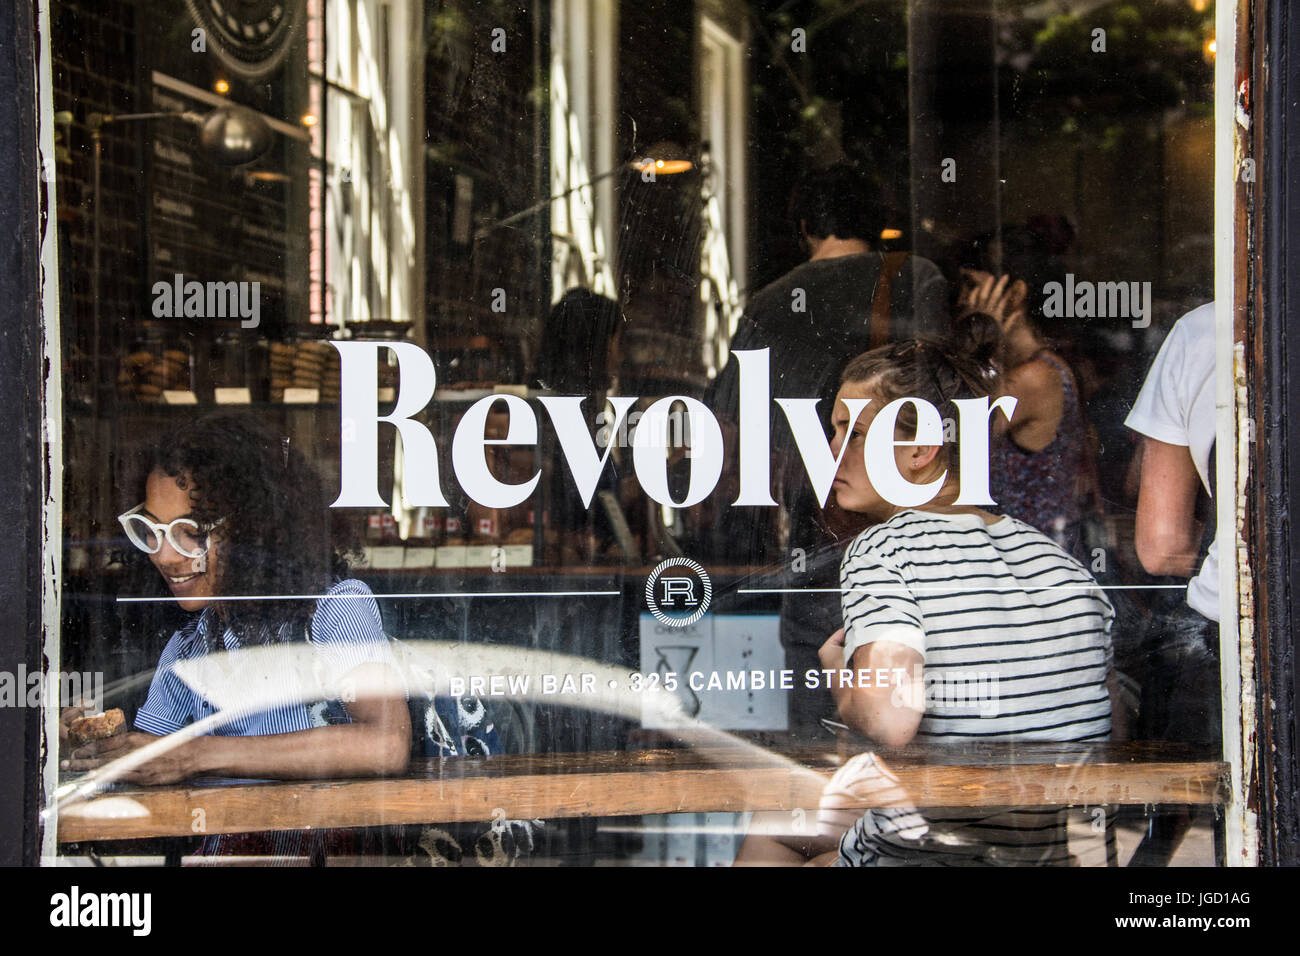 Revolver Cafe, Cambie Street, Vancouver, Canada Stock Photo